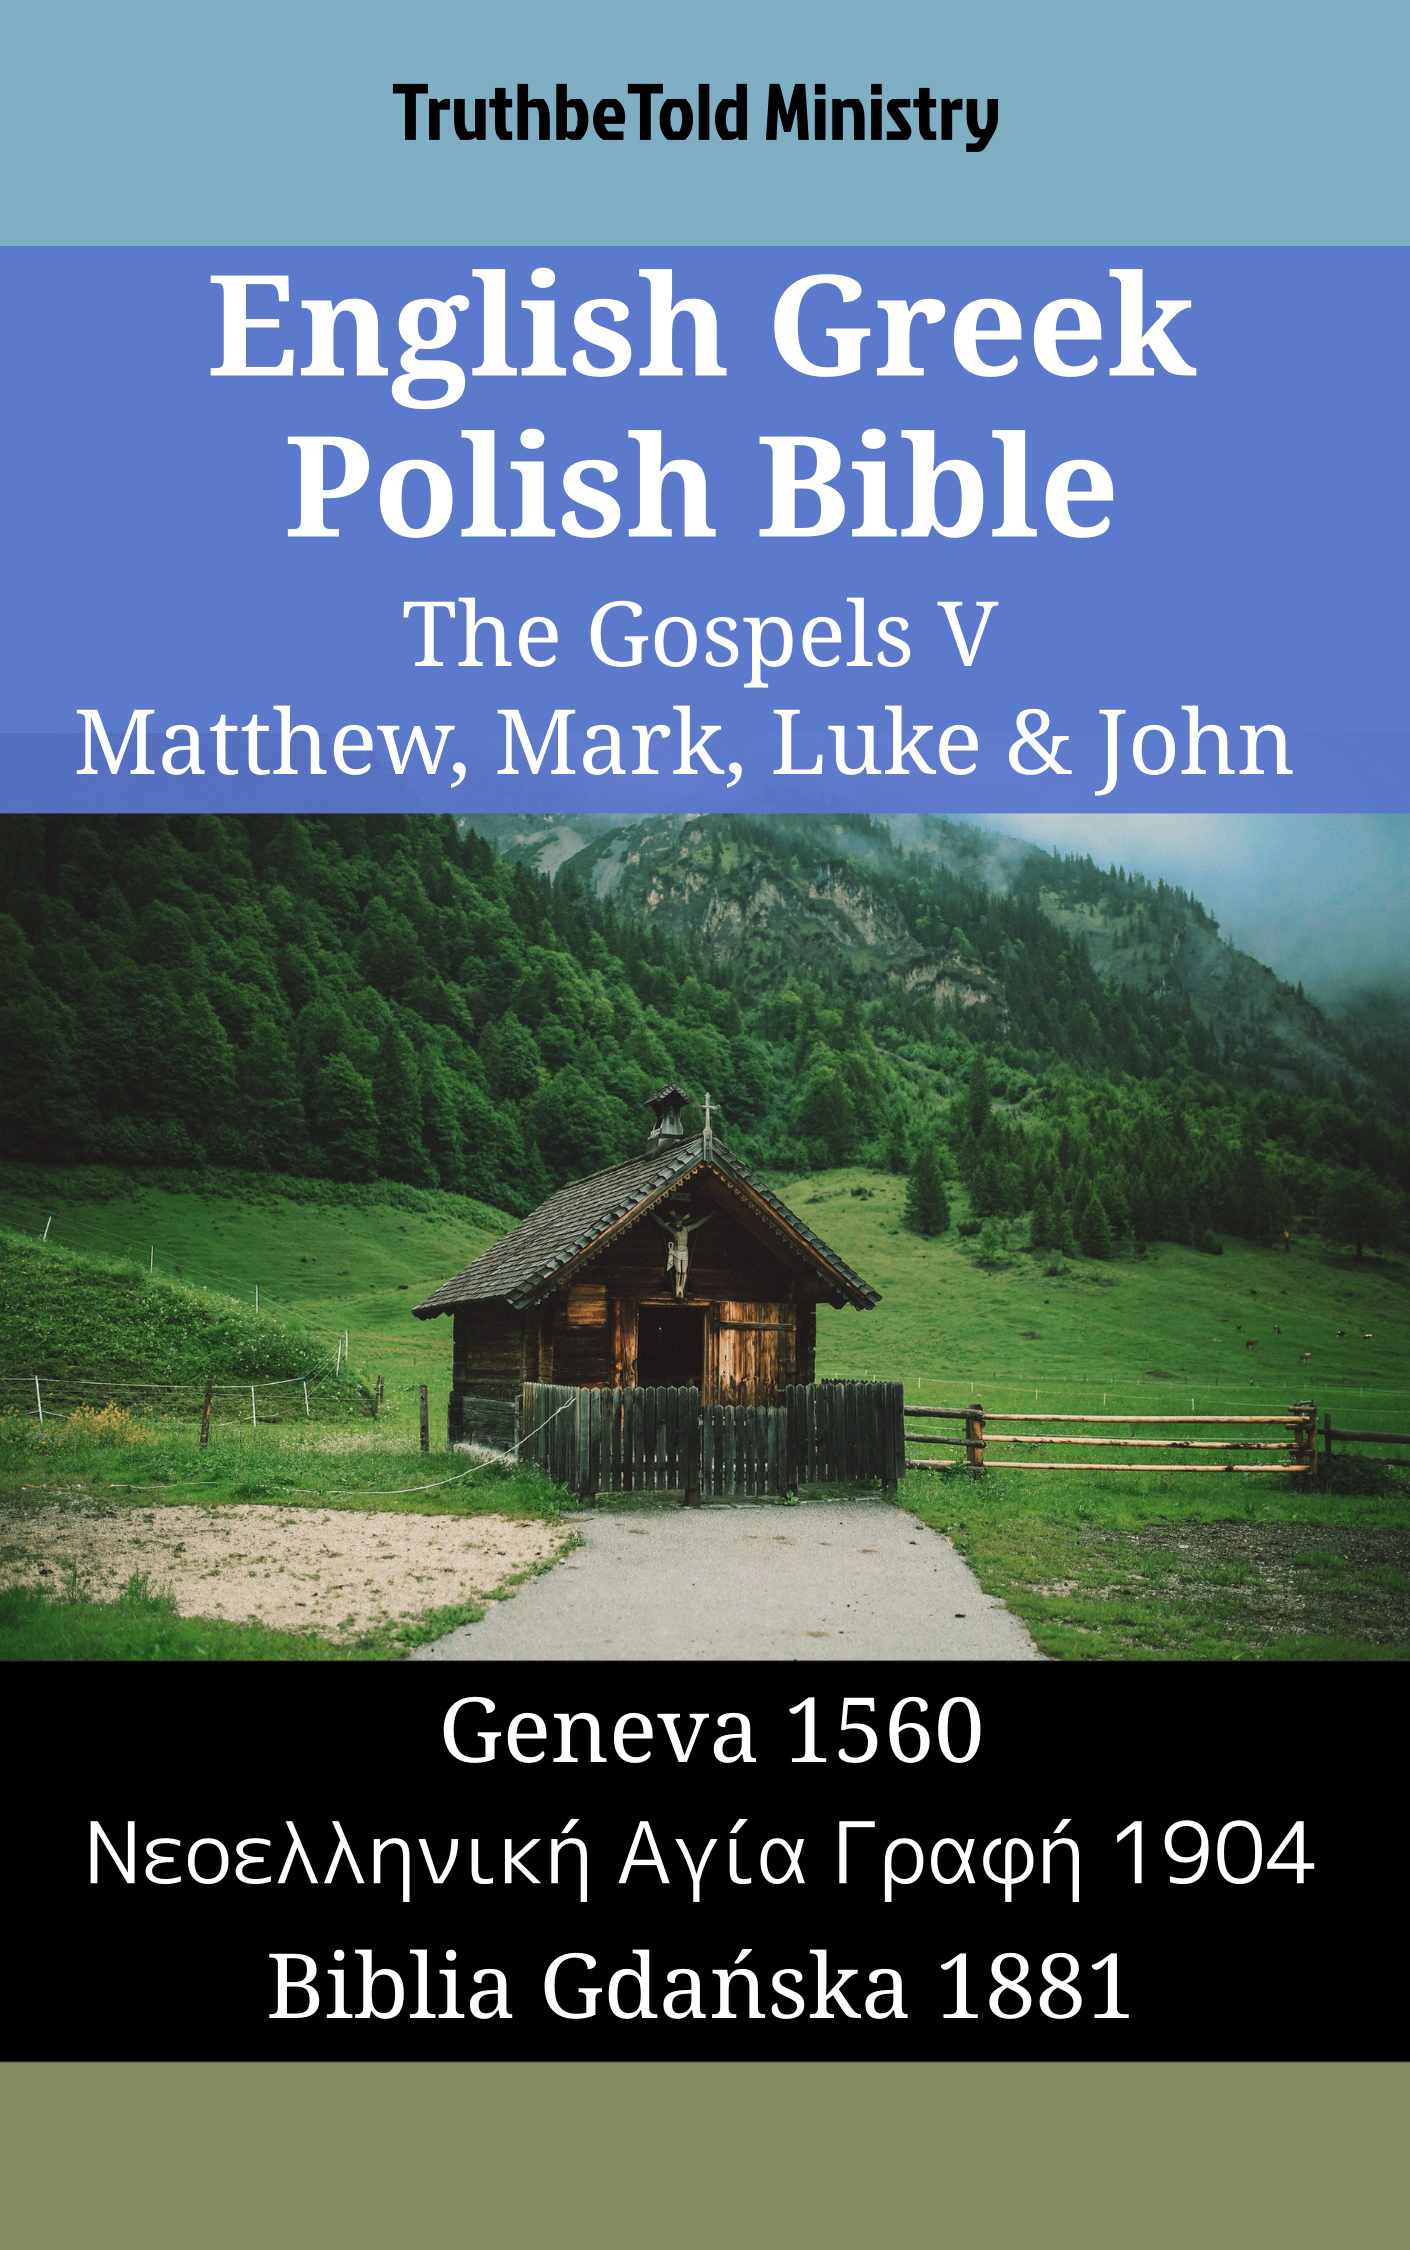 English Greek Polish Bible - The Gospels V - Matthew, Mark, Luke & John